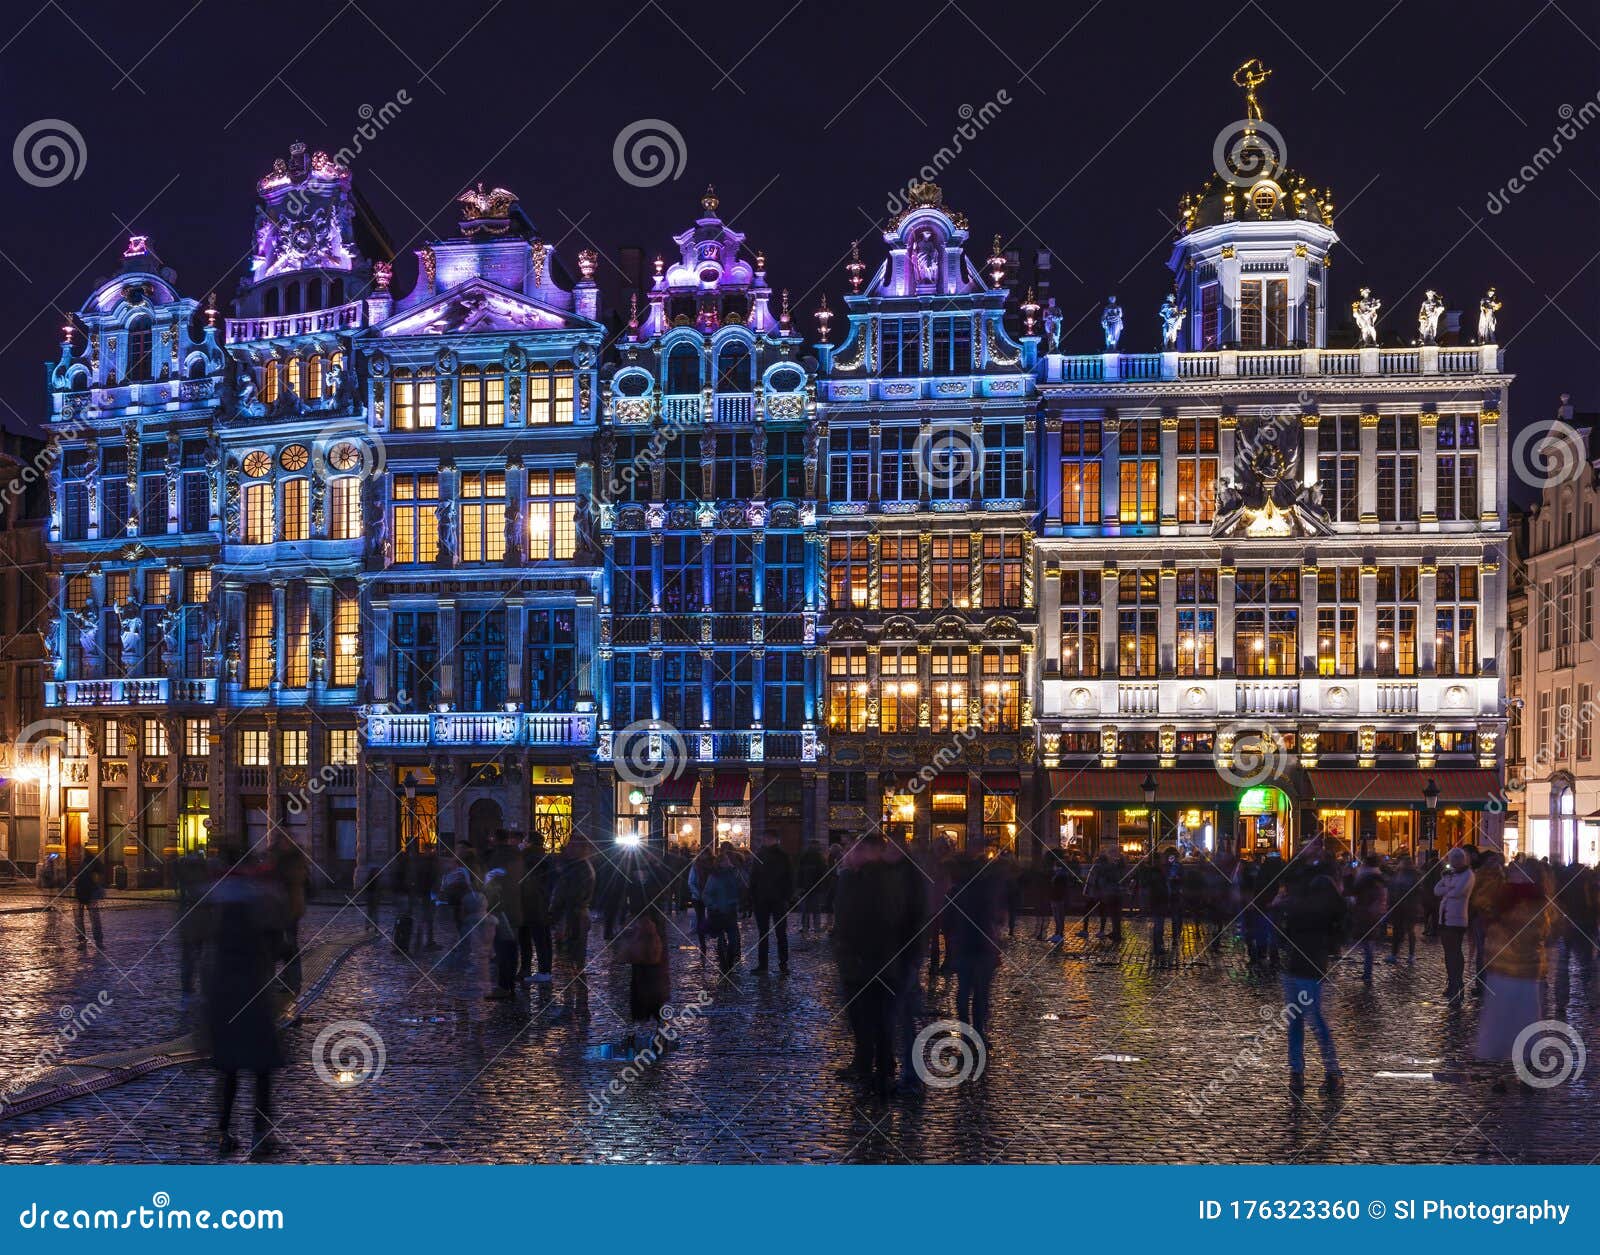 Grand Place at Brussels, Belgium Image - Image of illumination, 176323360